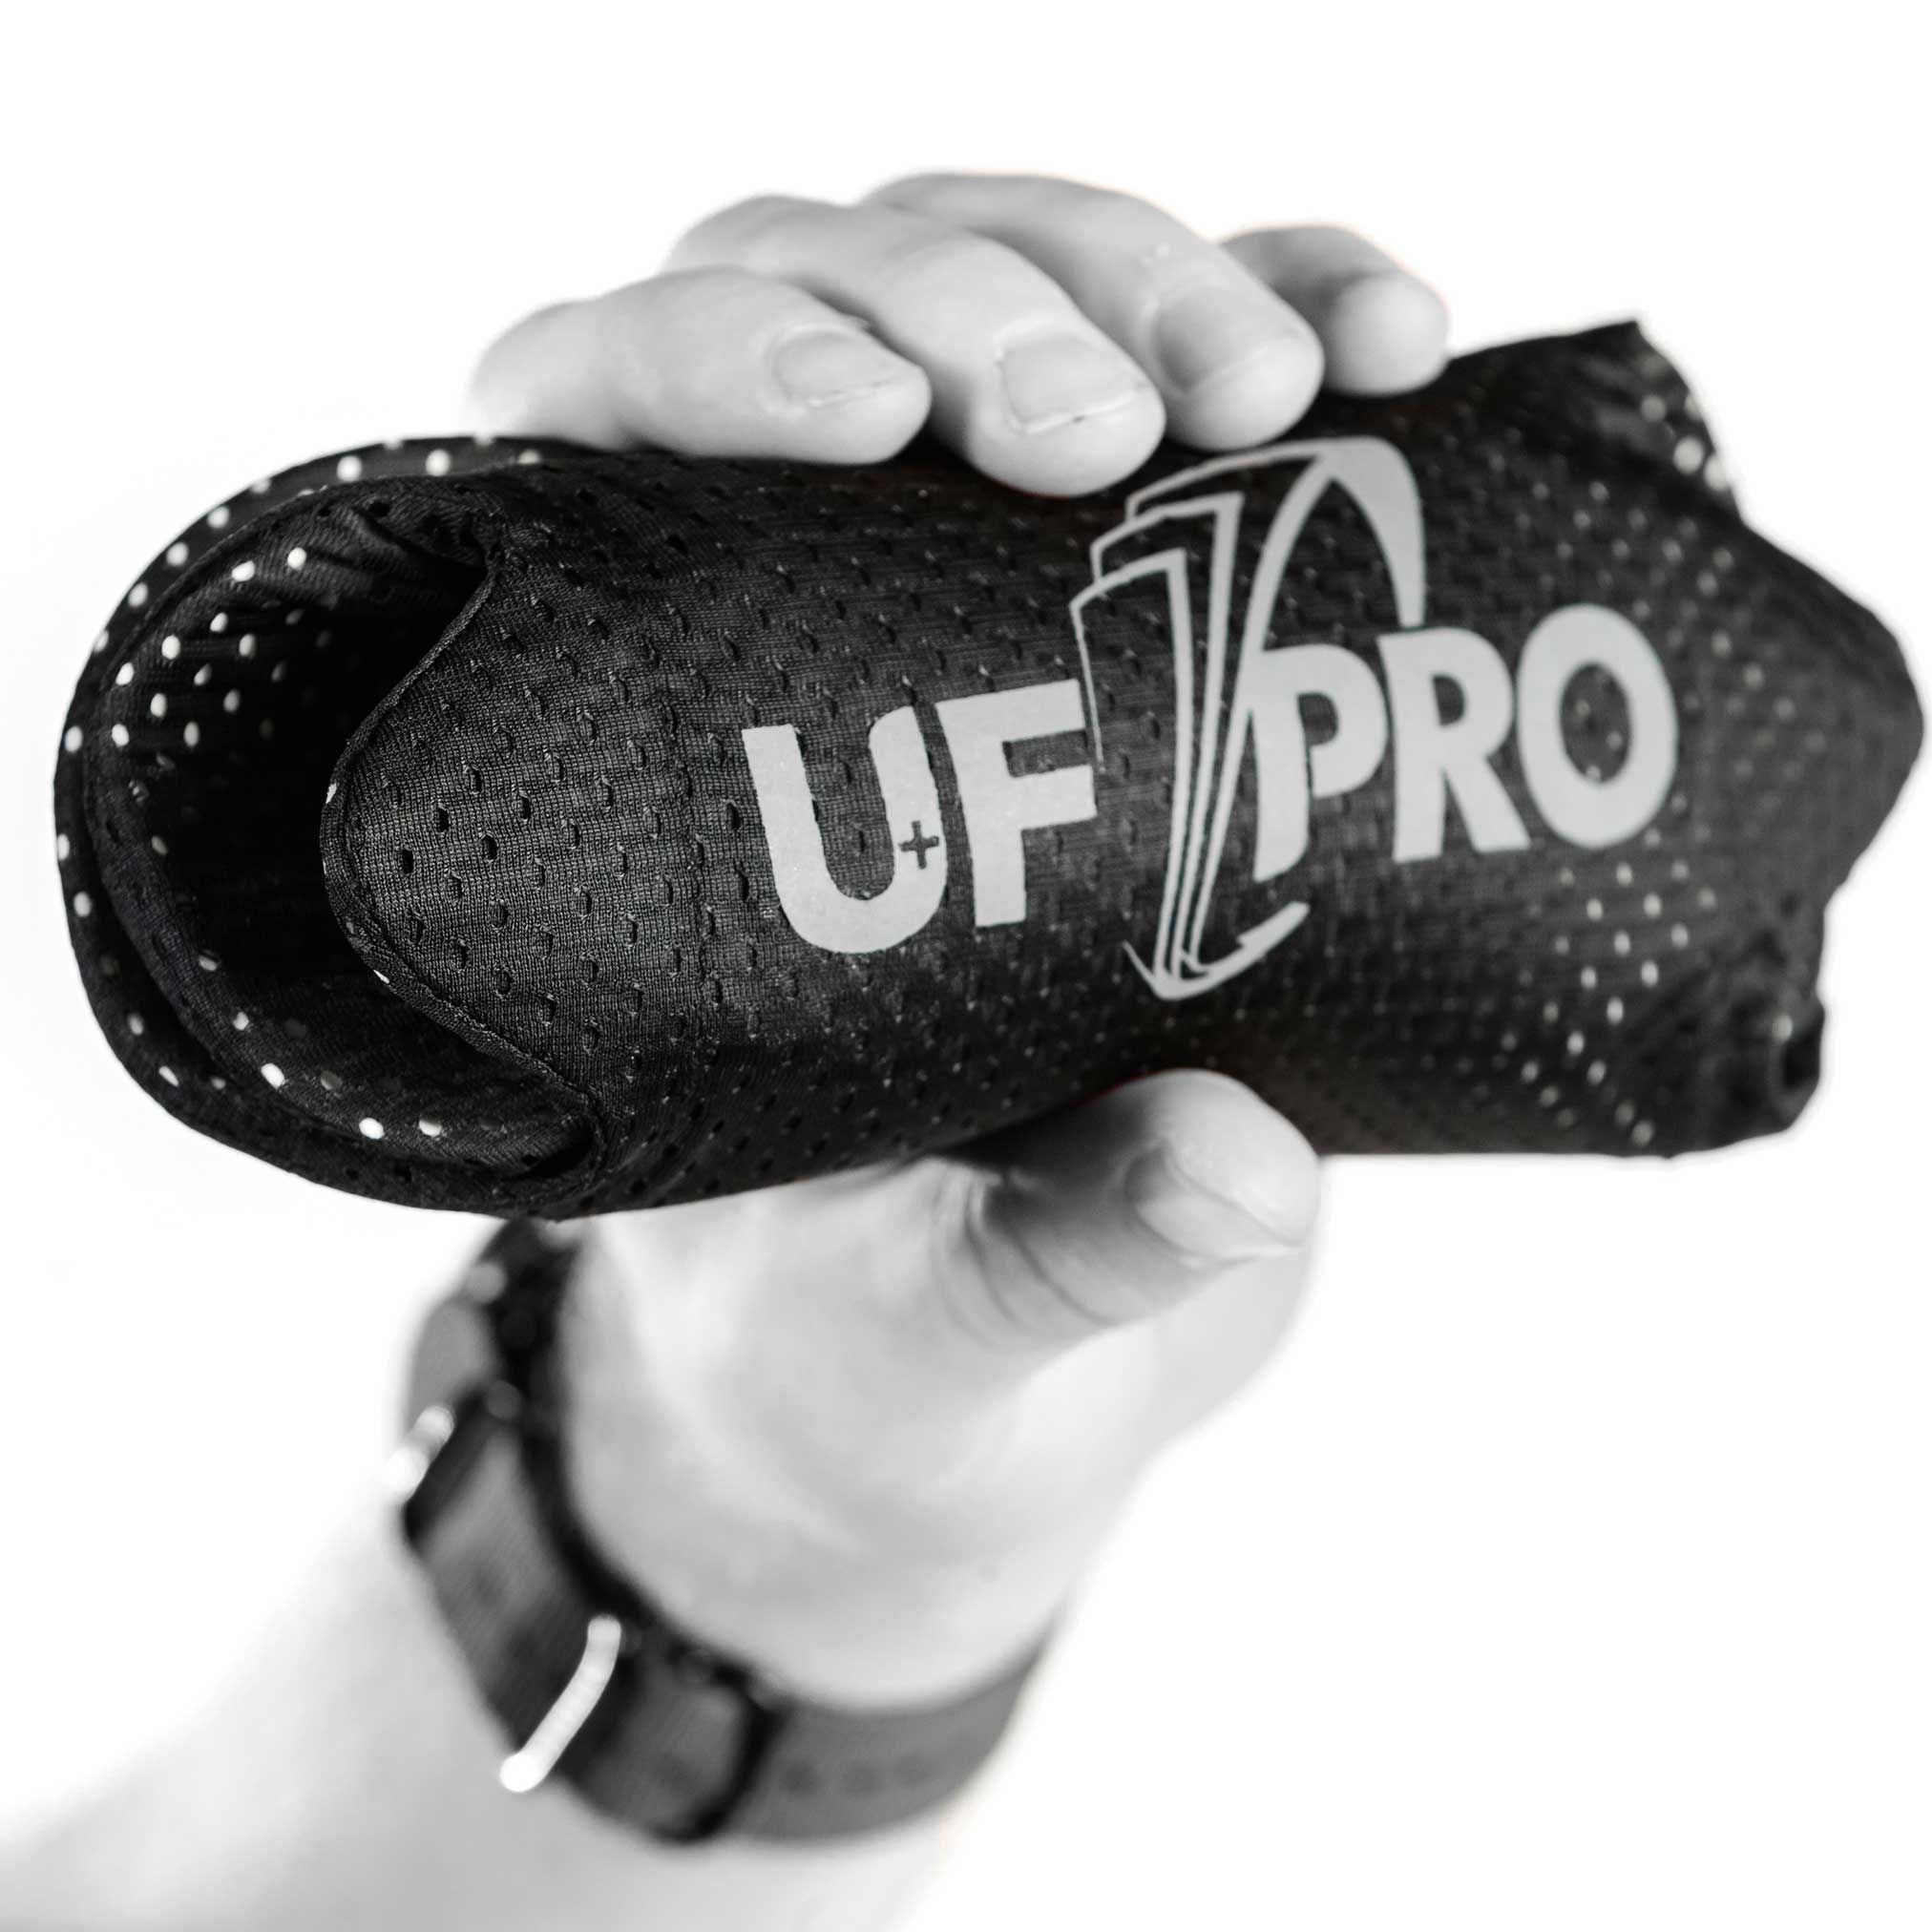 UF PRO - 3D Tactical Knee Pads - Impact